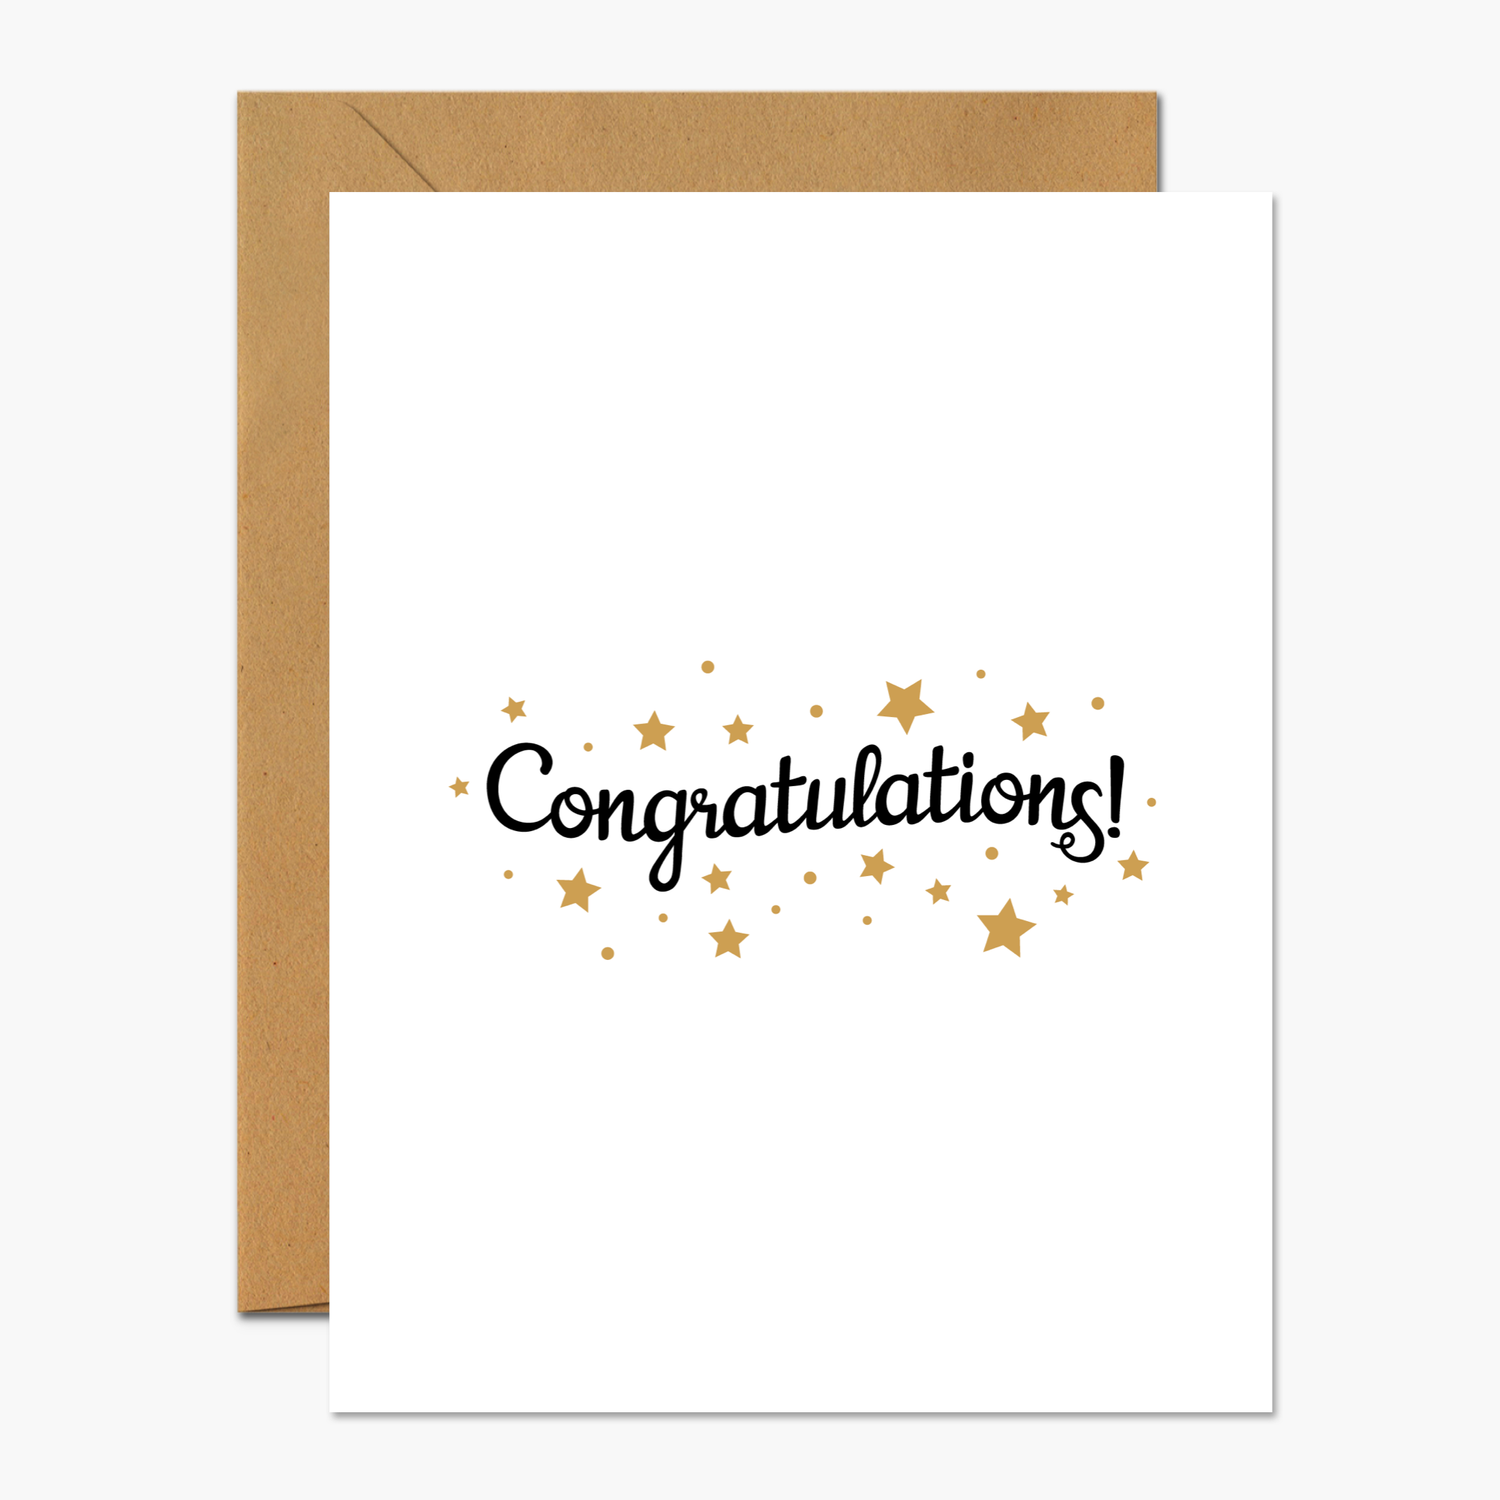 Congratulations Black and Gold Stars Congrats Greeting Card | Footnotes Paper